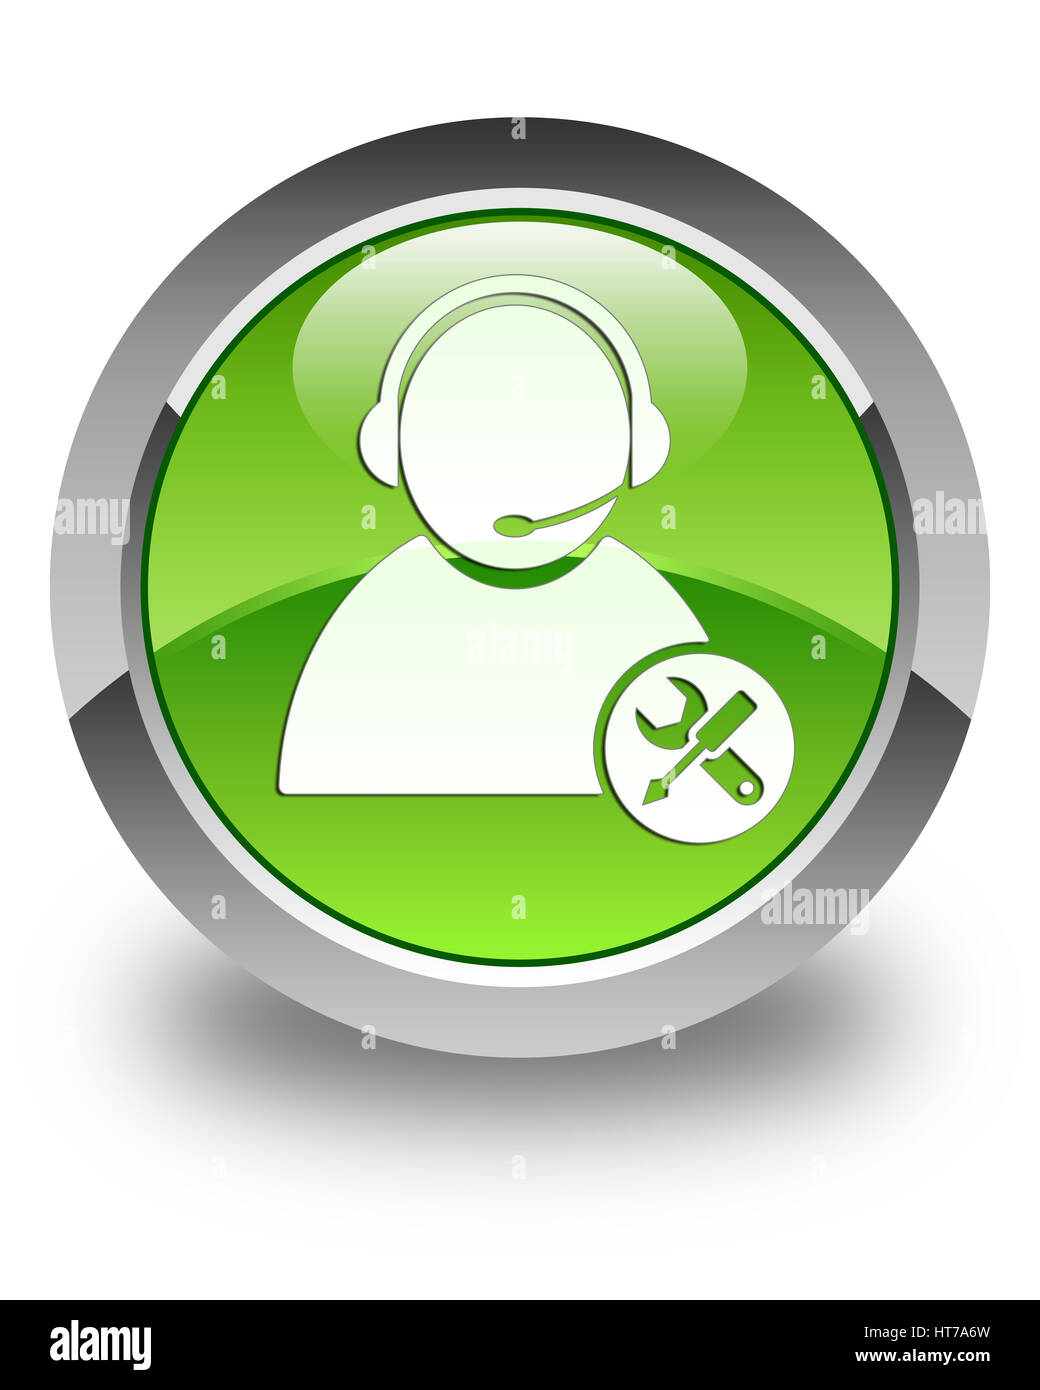 Support isolé sur l'icône bouton rond vert brillant abstract illustration Banque D'Images